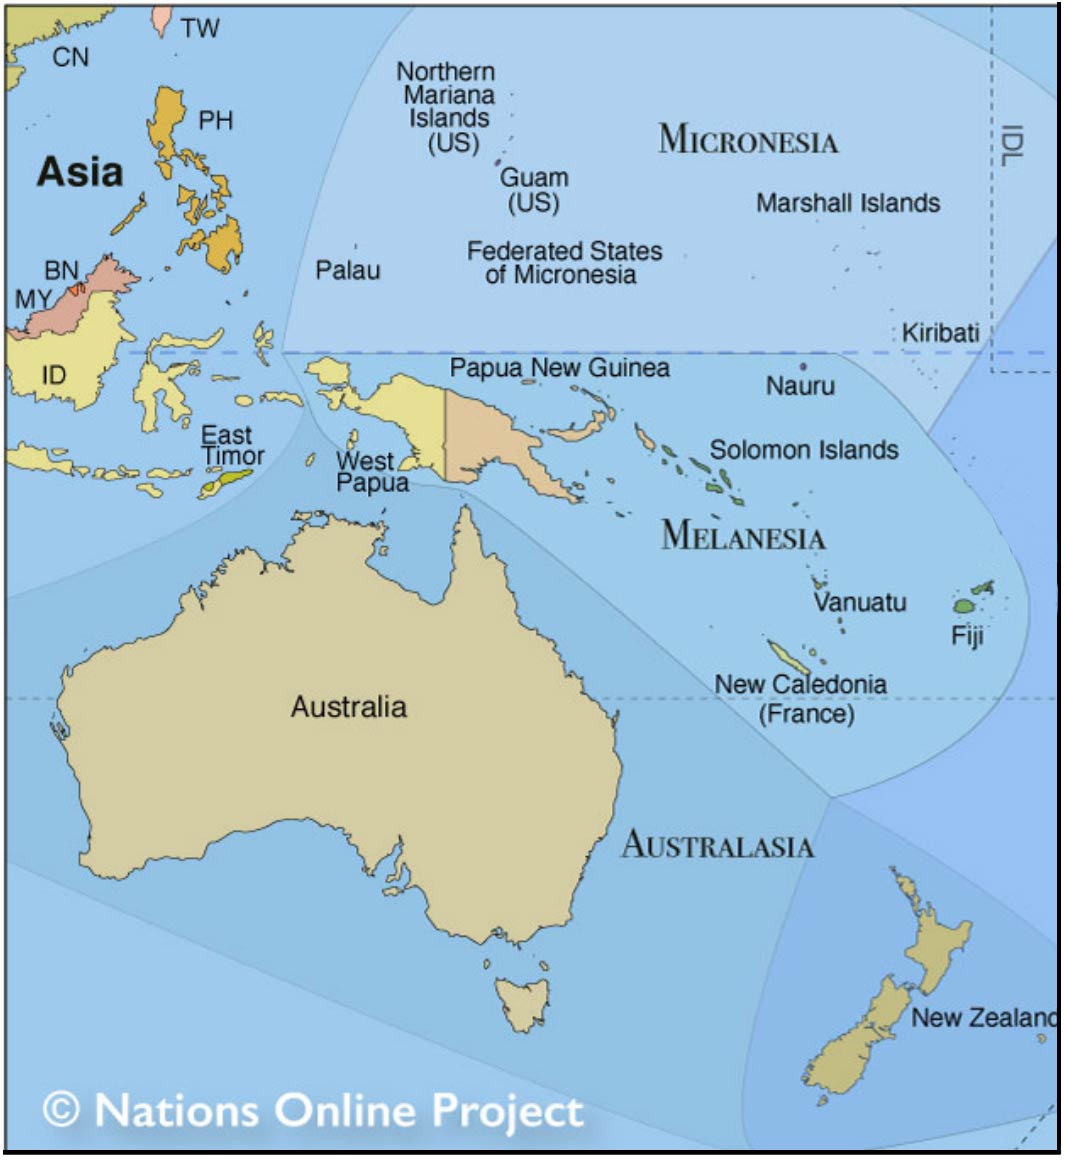 Map of the regions of Oceania: Micronesia, Melanesia, Polynesia, and Australasia.